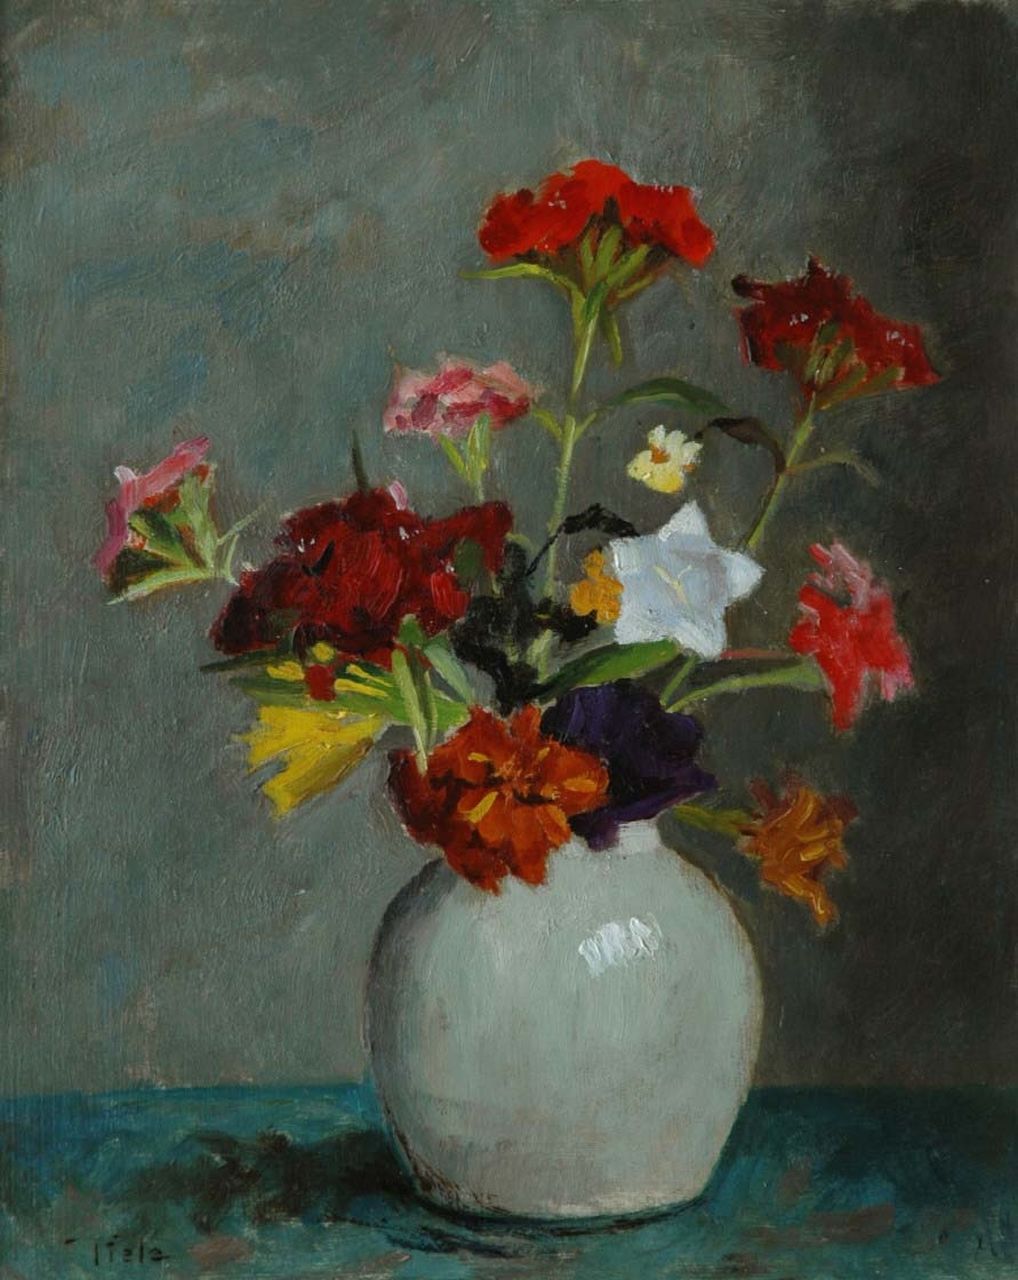 Tiele J.  | 'Jan' Cornelis Tiele, Gemengde zomerbloemen in grijs potje, olieverf op board 30,0 x 24,0 cm, gesigneerd linksonder en te dateren 1945-1955